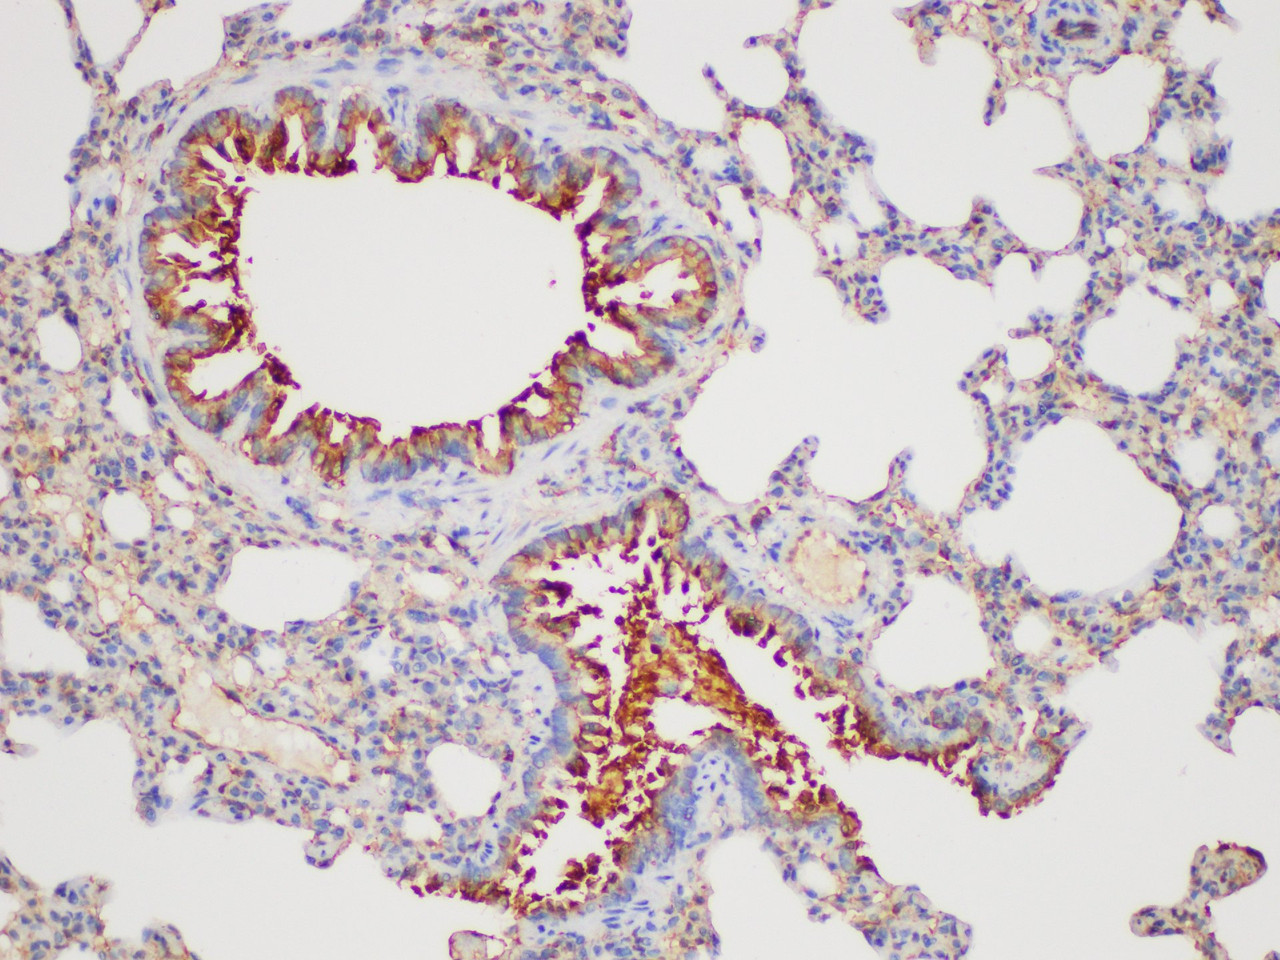 https://file.elabscience.com//image/antibody/EA/E-AB-40416-IHC03.jpg